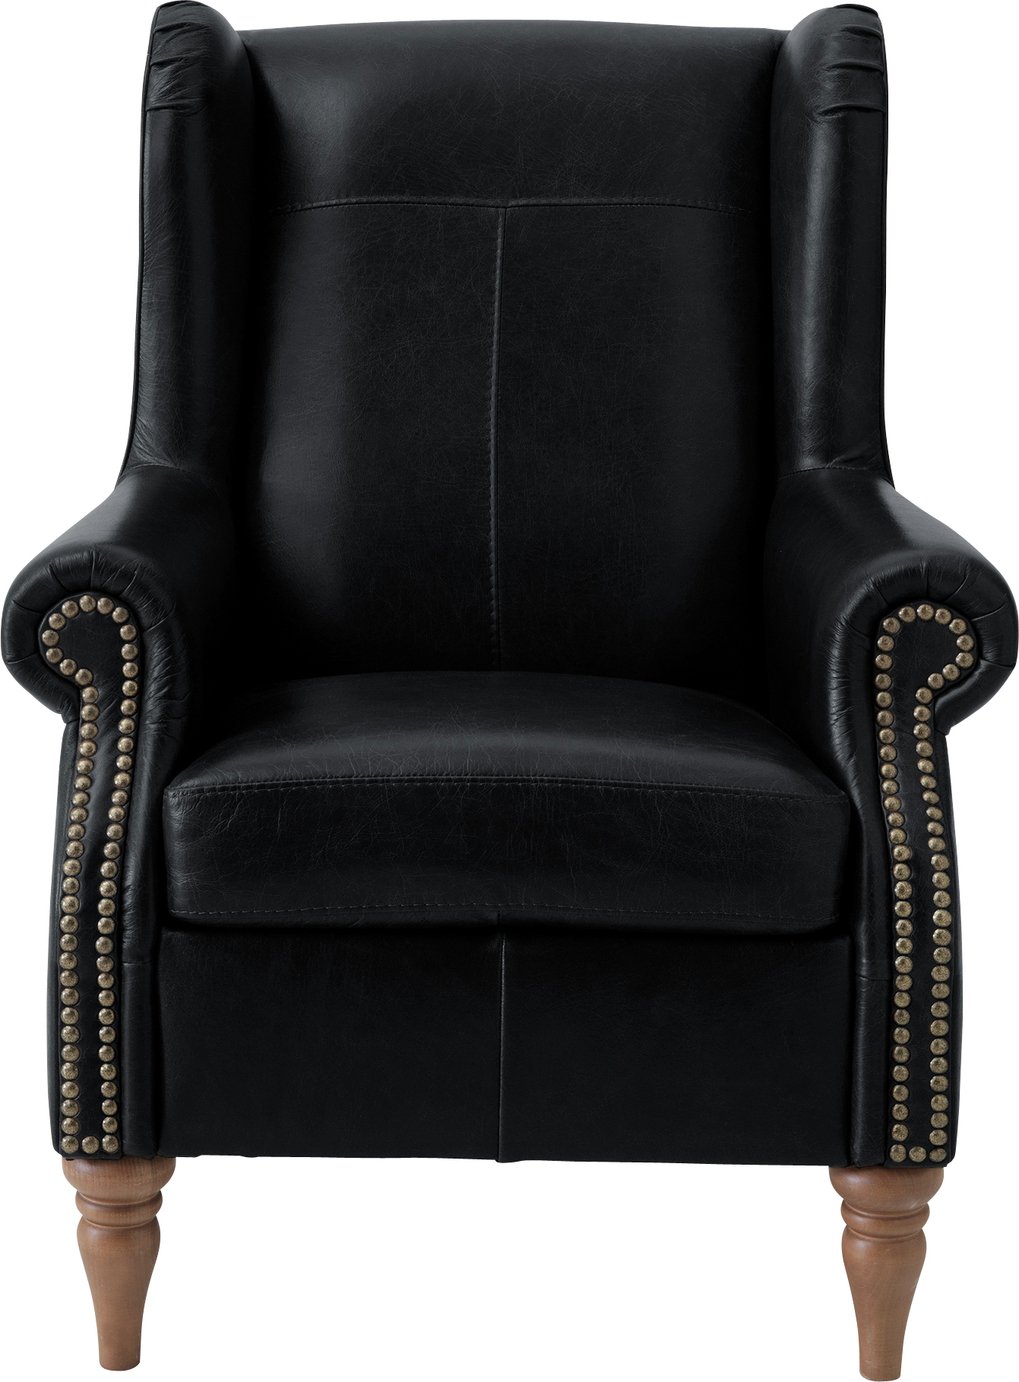 Argos Home Argyll Studded Leather High Back Chair - Black